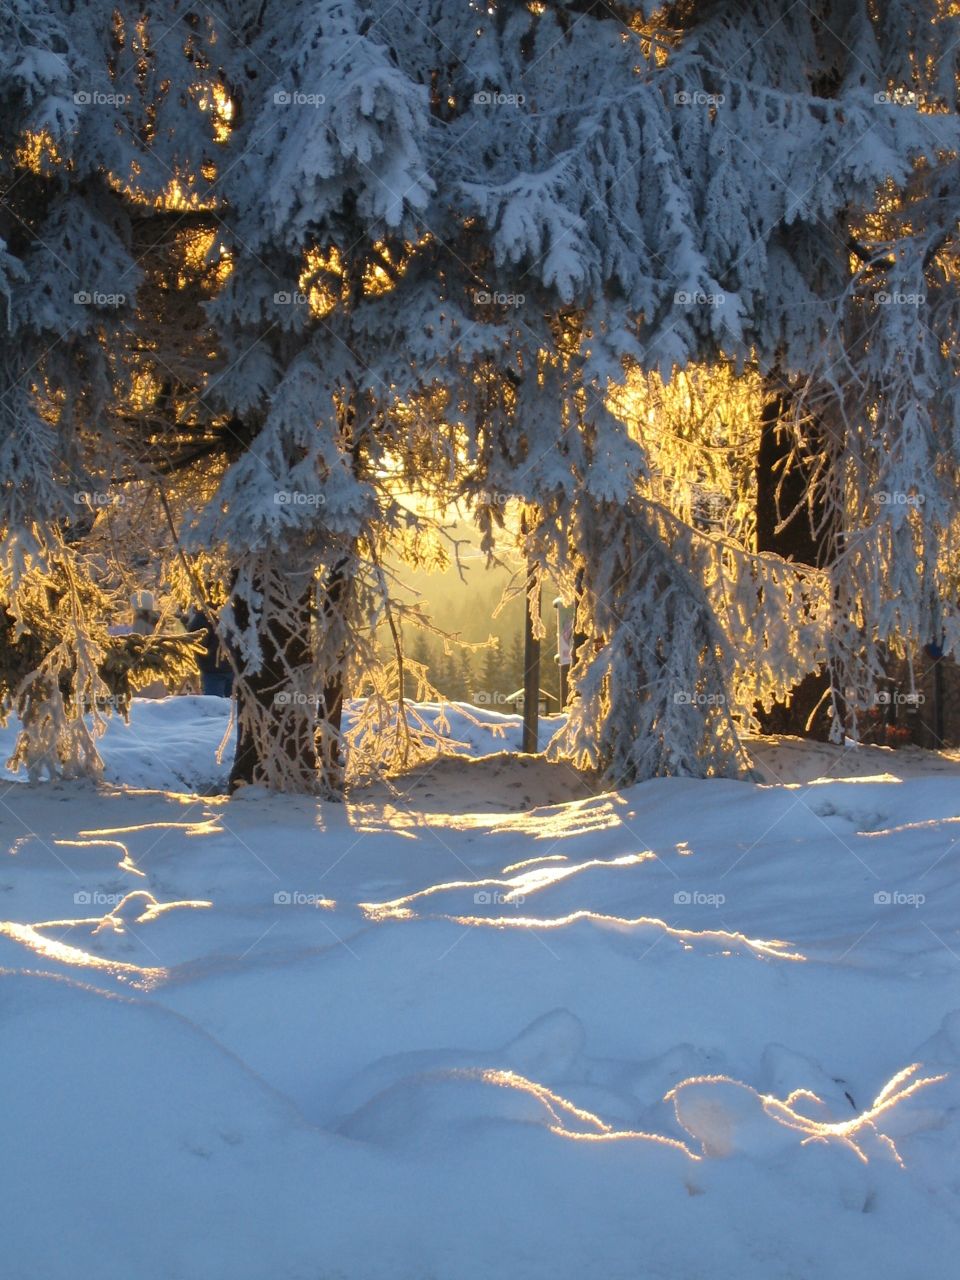 Snow & sun, winter light ⛄🌞